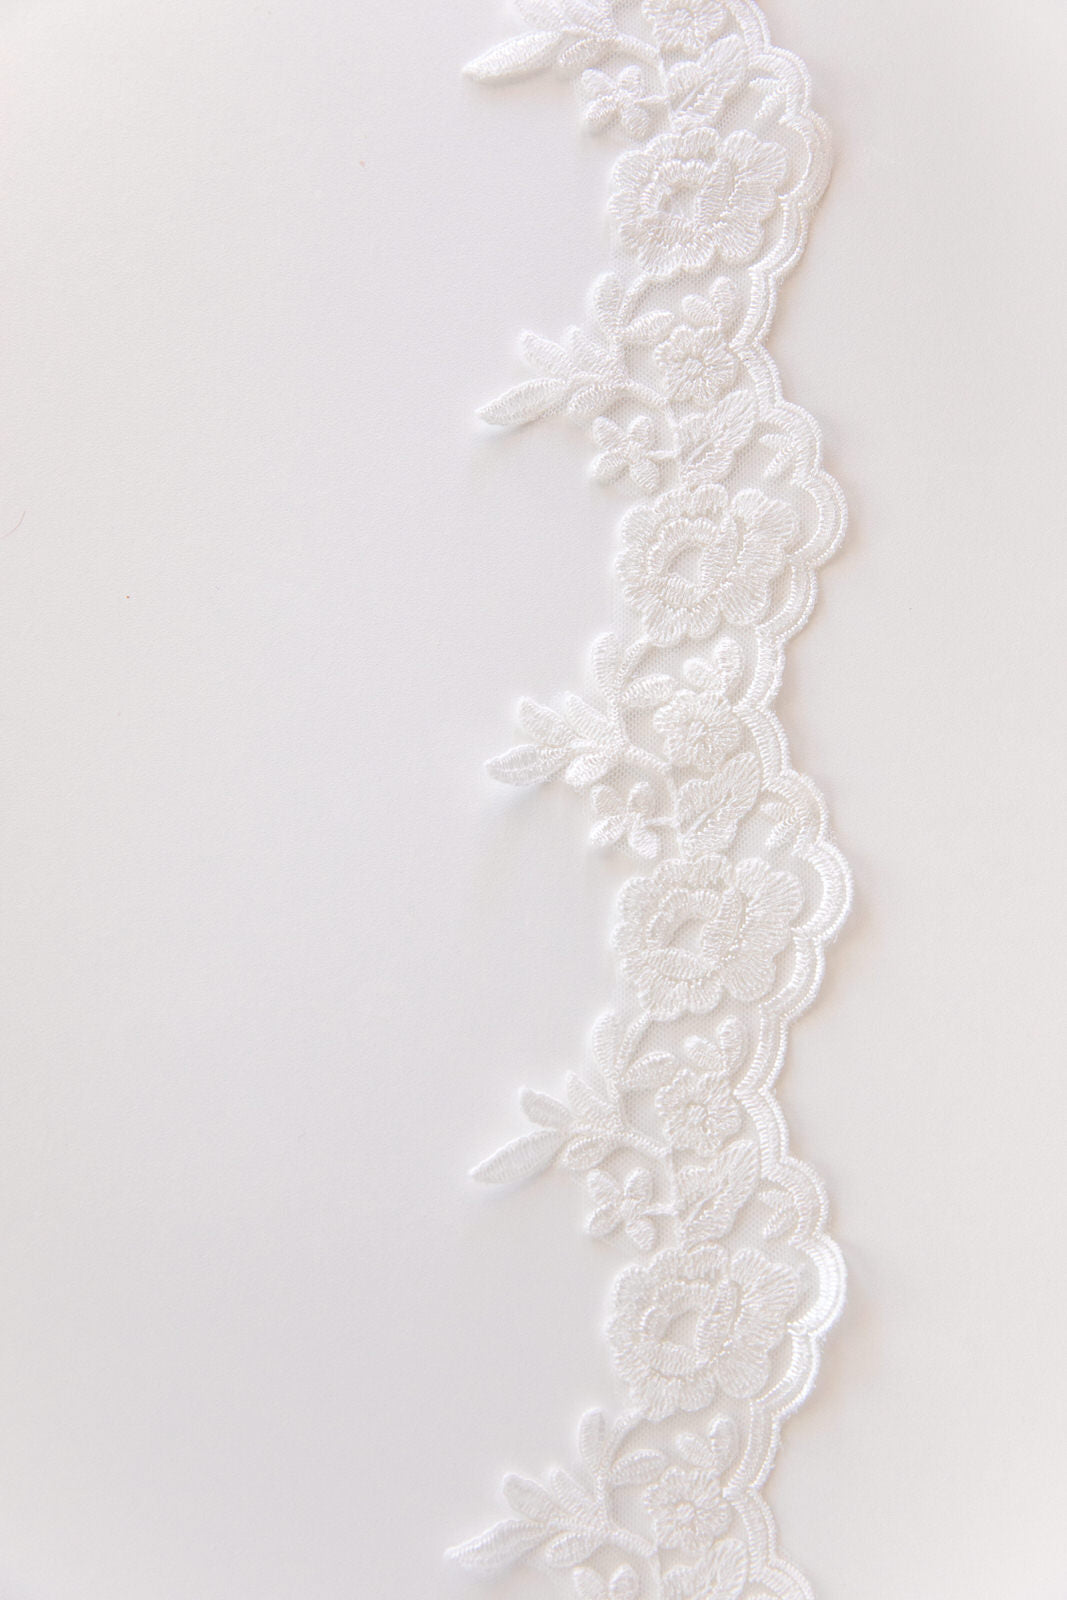 French alencon lace bridal veil with scallop